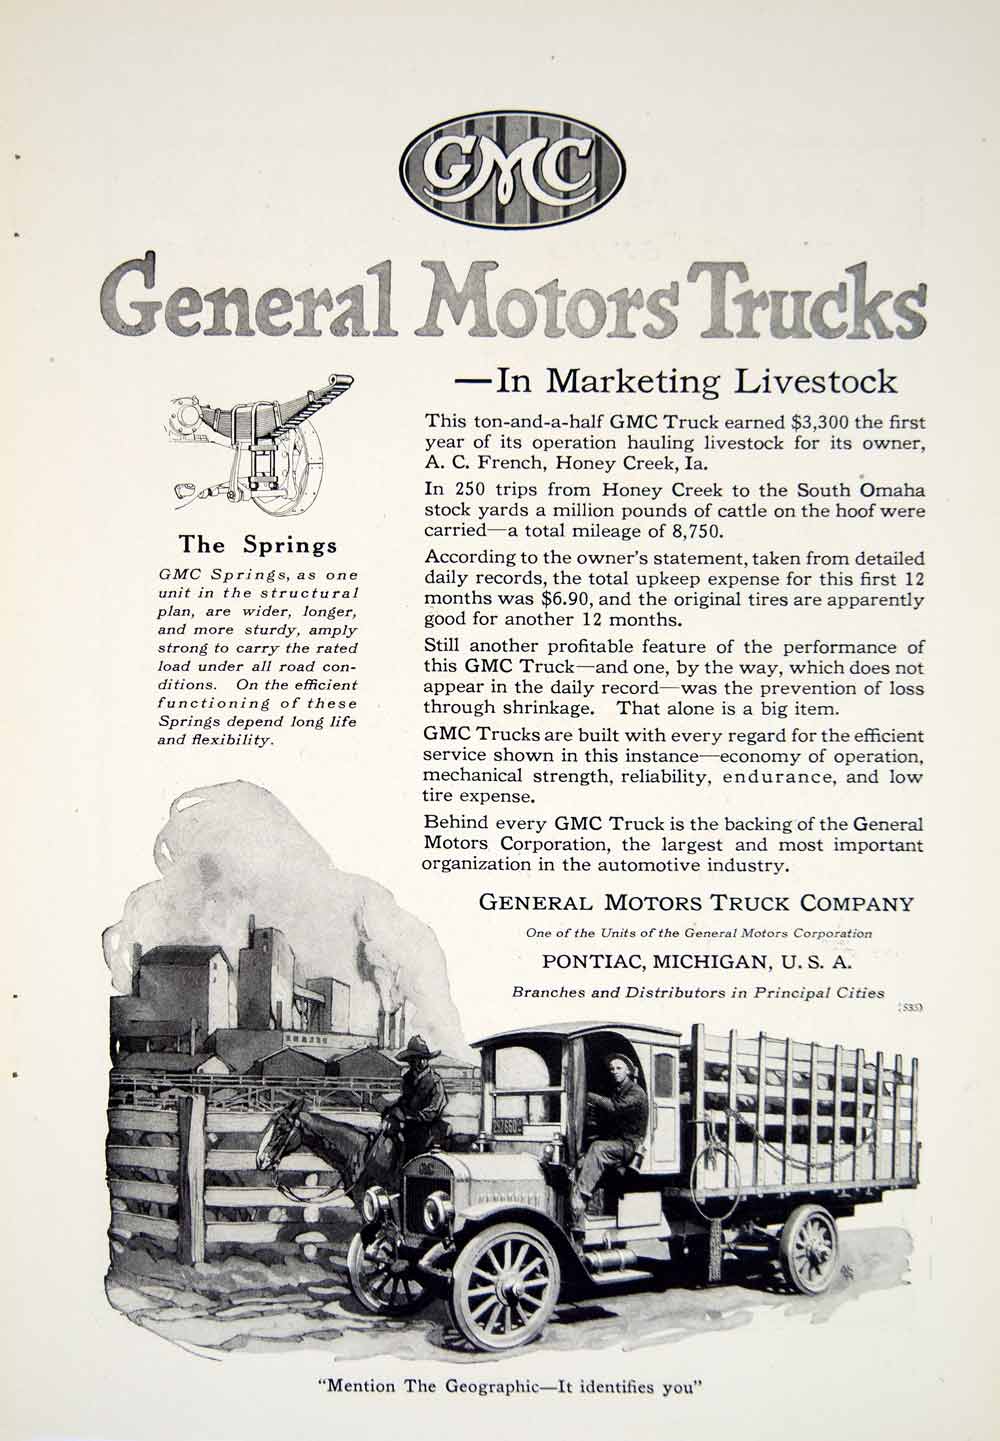 1919 Ad General Motors Truck Company Vehicle Livestock Transport Image YNG4